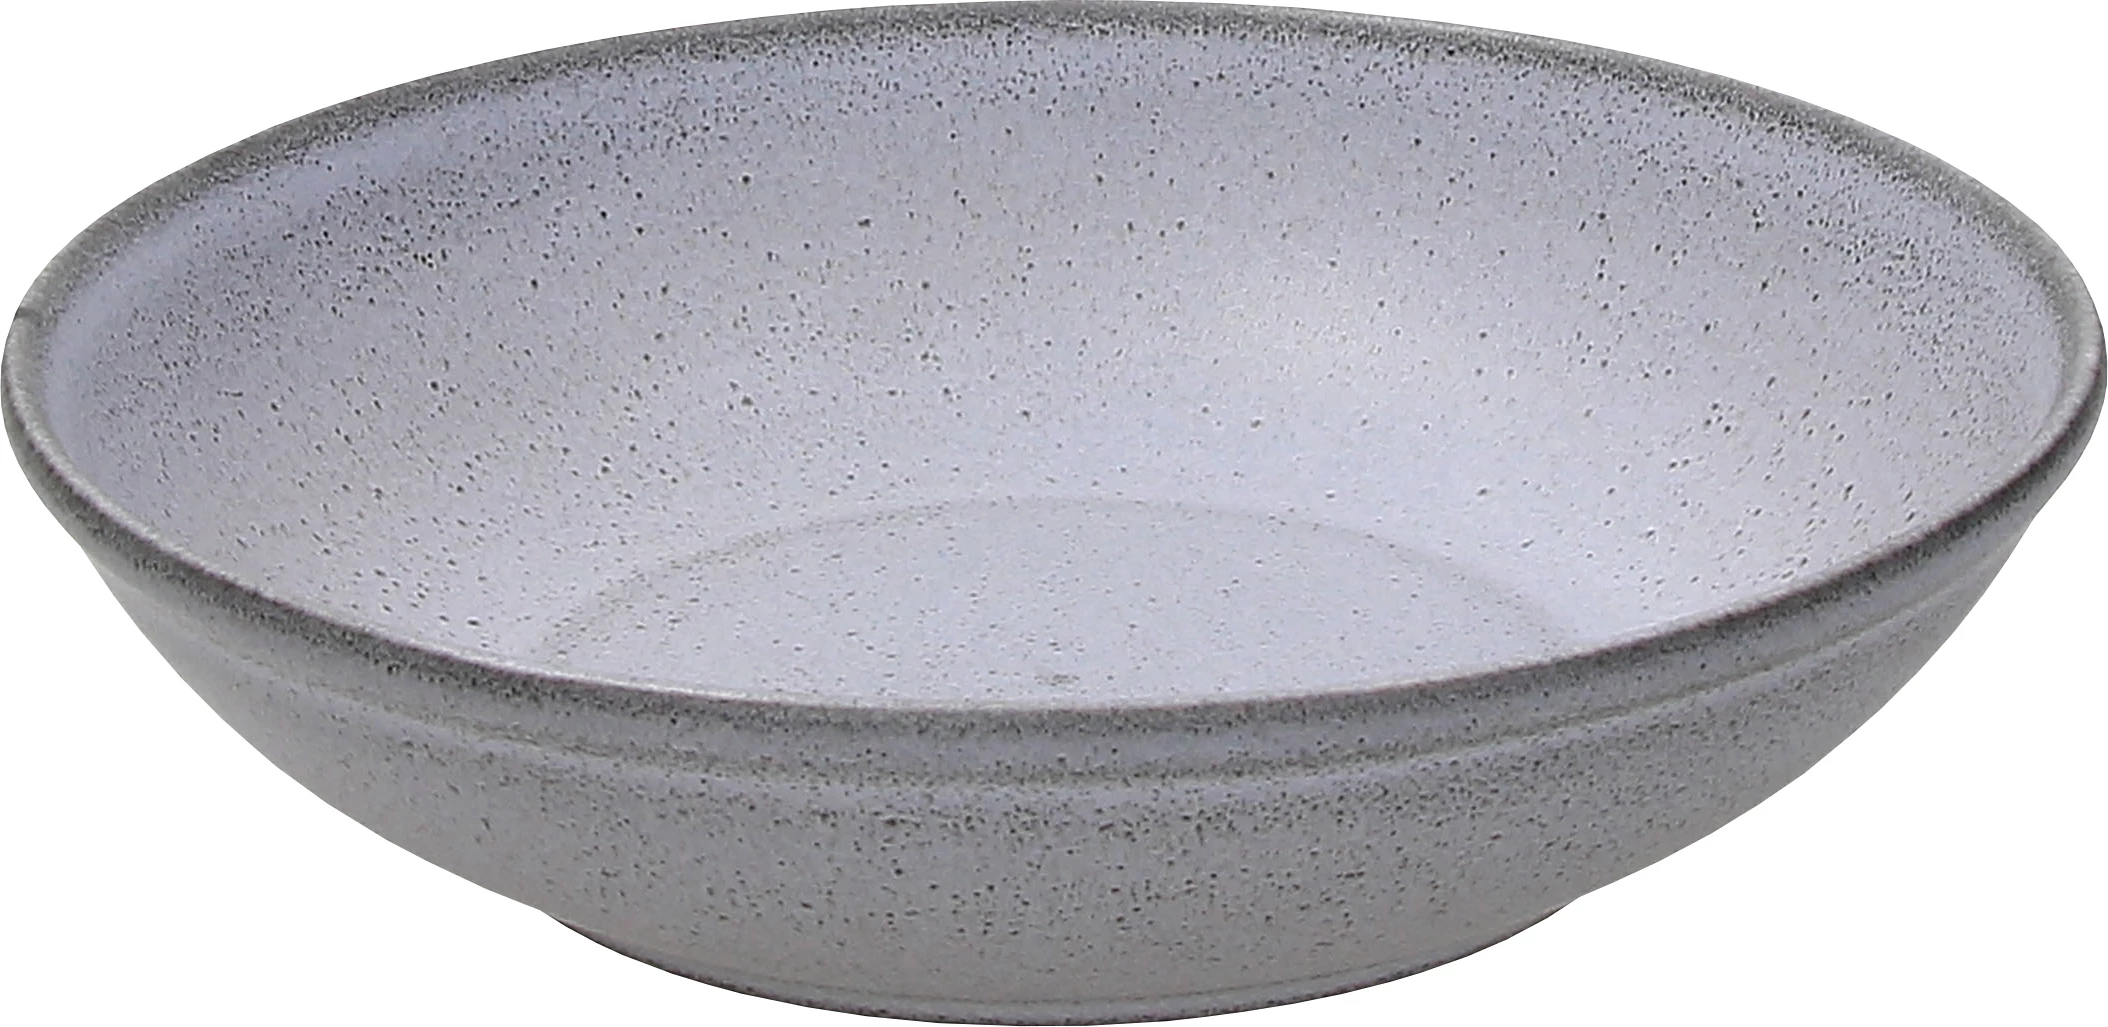 Tognana Terracotta tallerken uden fane, dyb, grå, ø20 cm